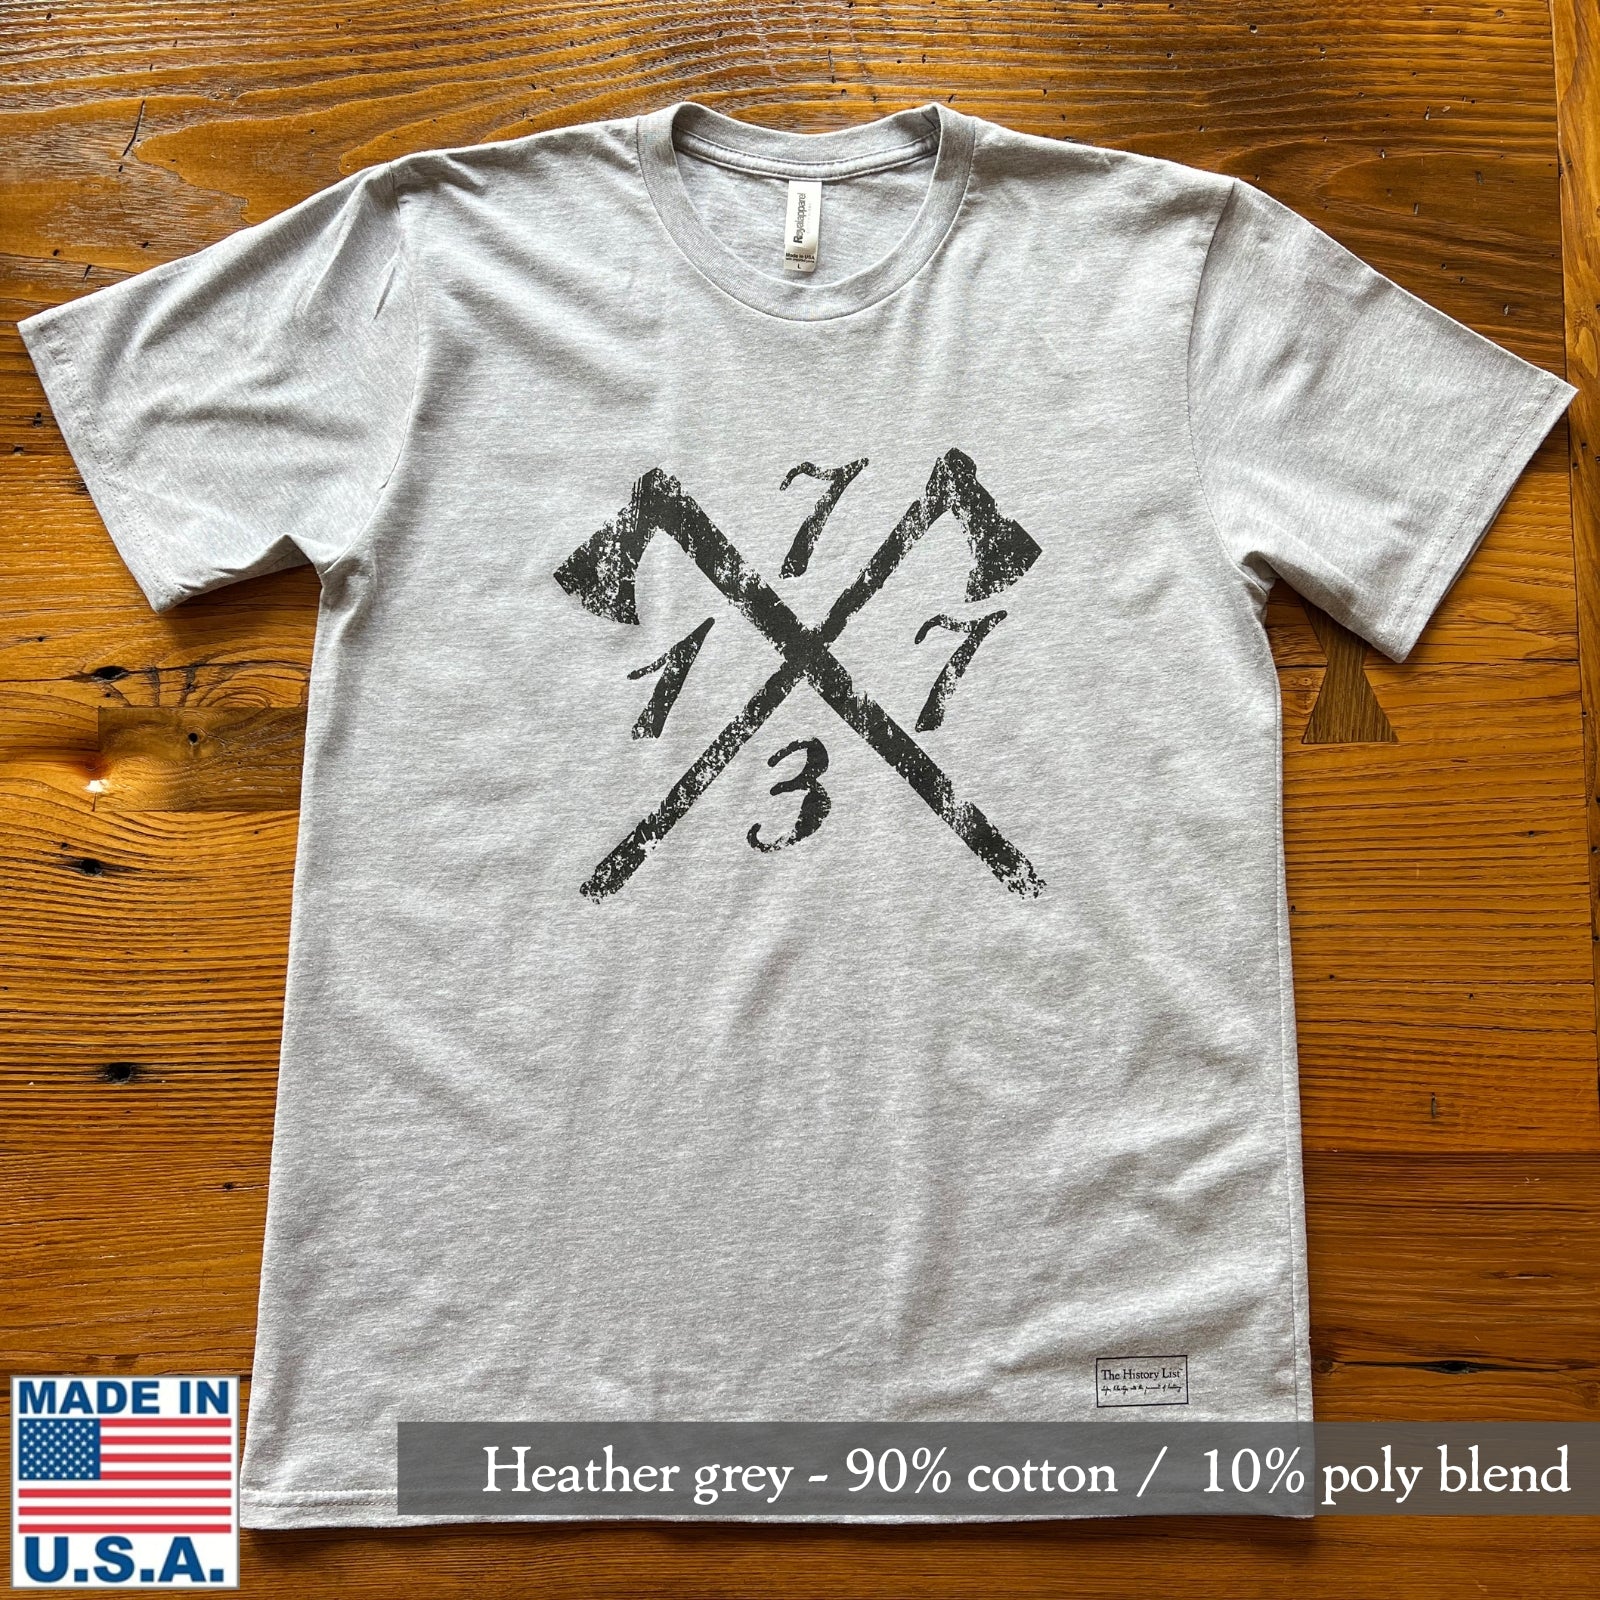 Boston T-Shirts & T-Shirt Designs